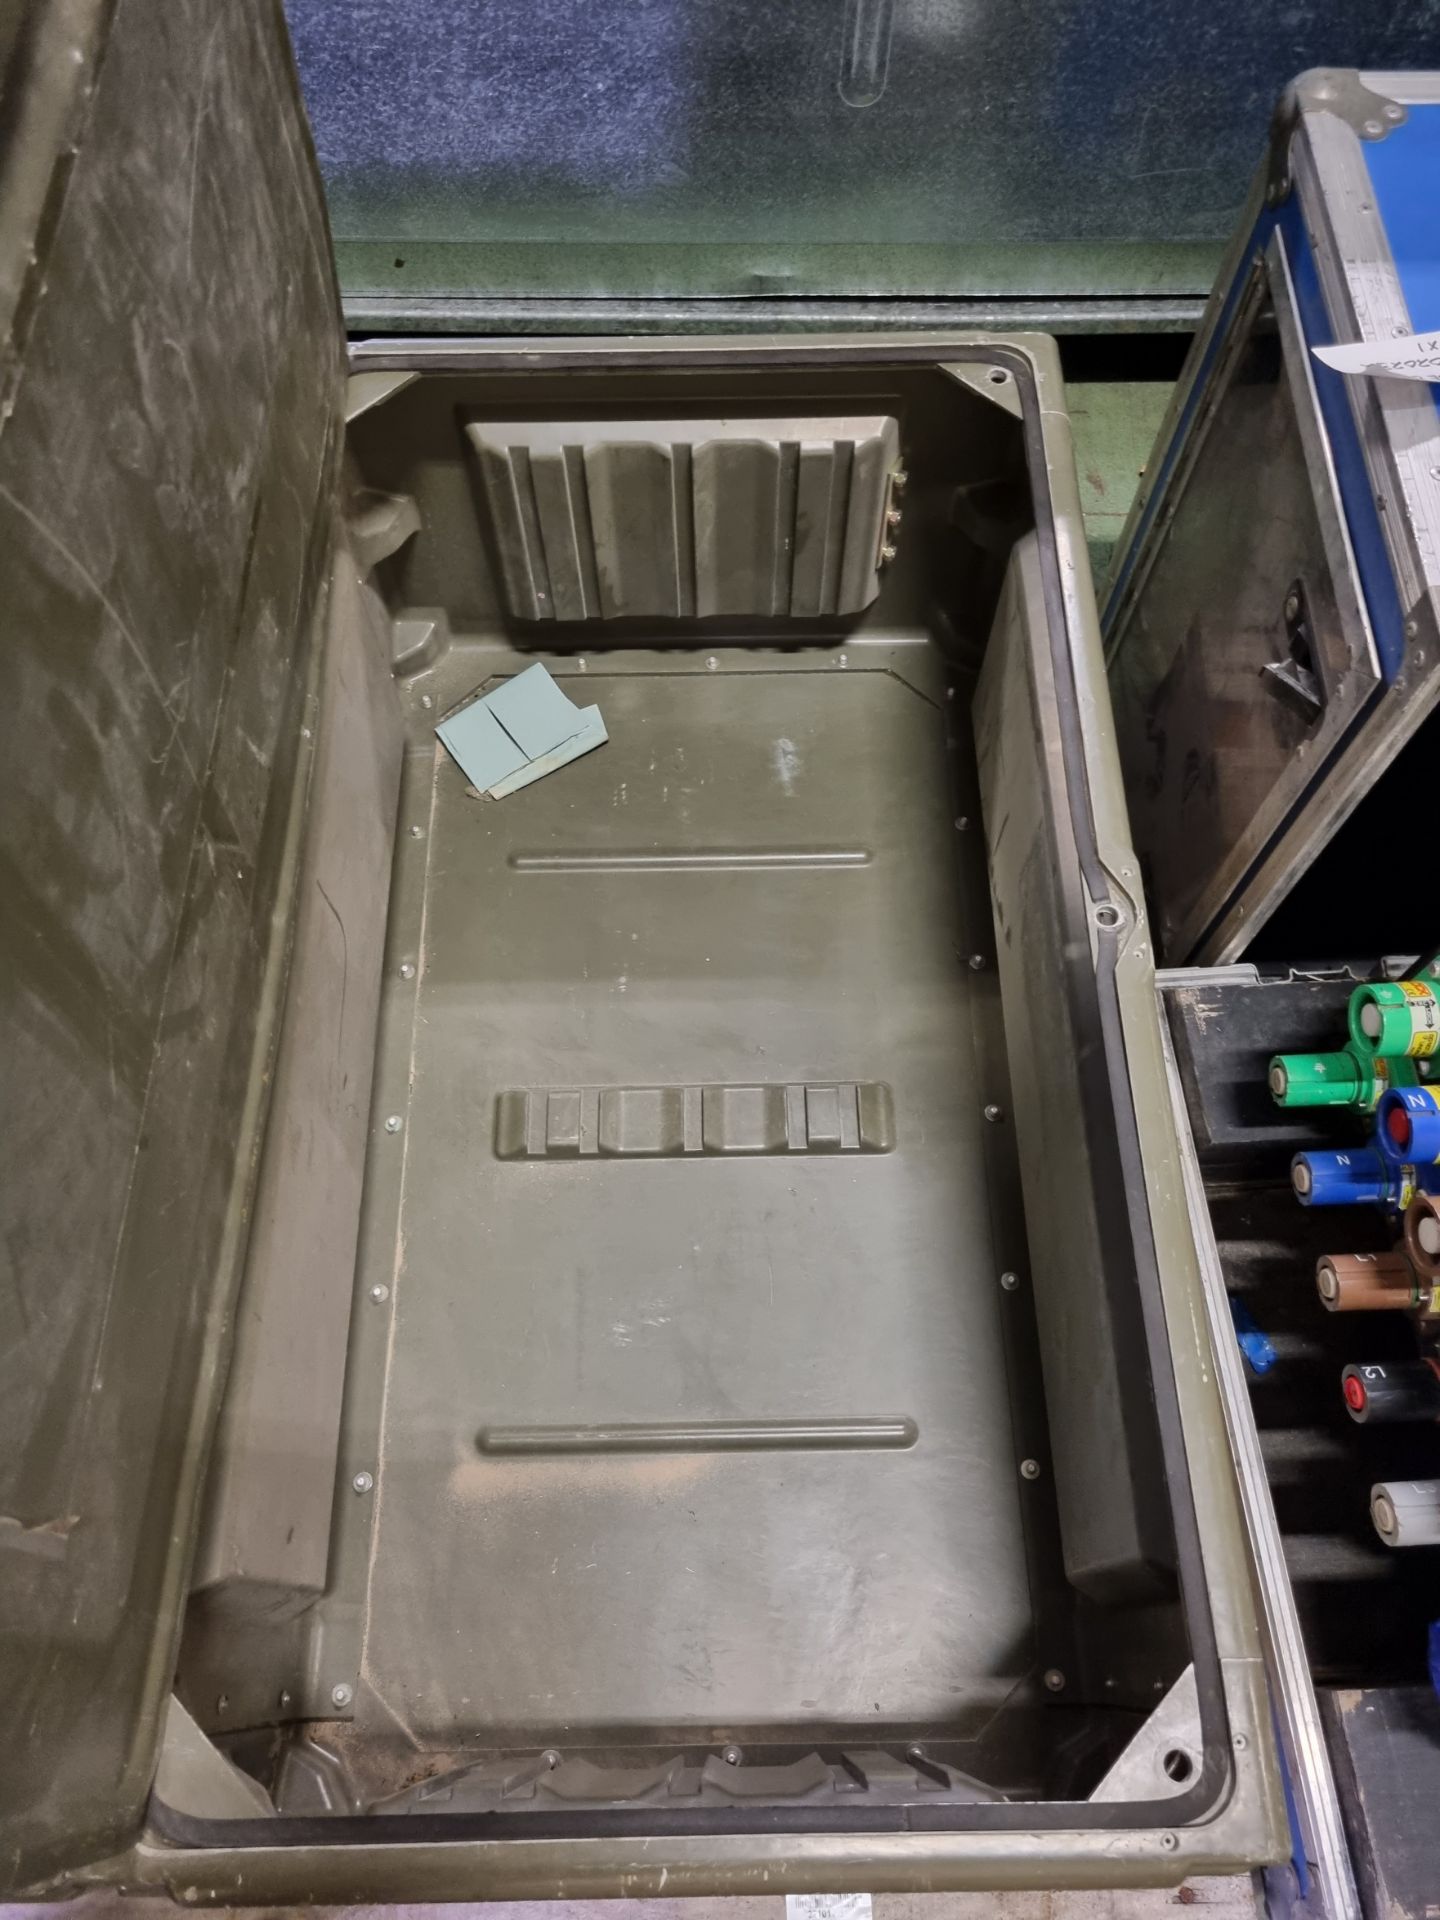 2x Interlocking assembly bins - 88x52x32cm, Green stretcher (missing handle) - 230x70x24cm - Image 6 of 6